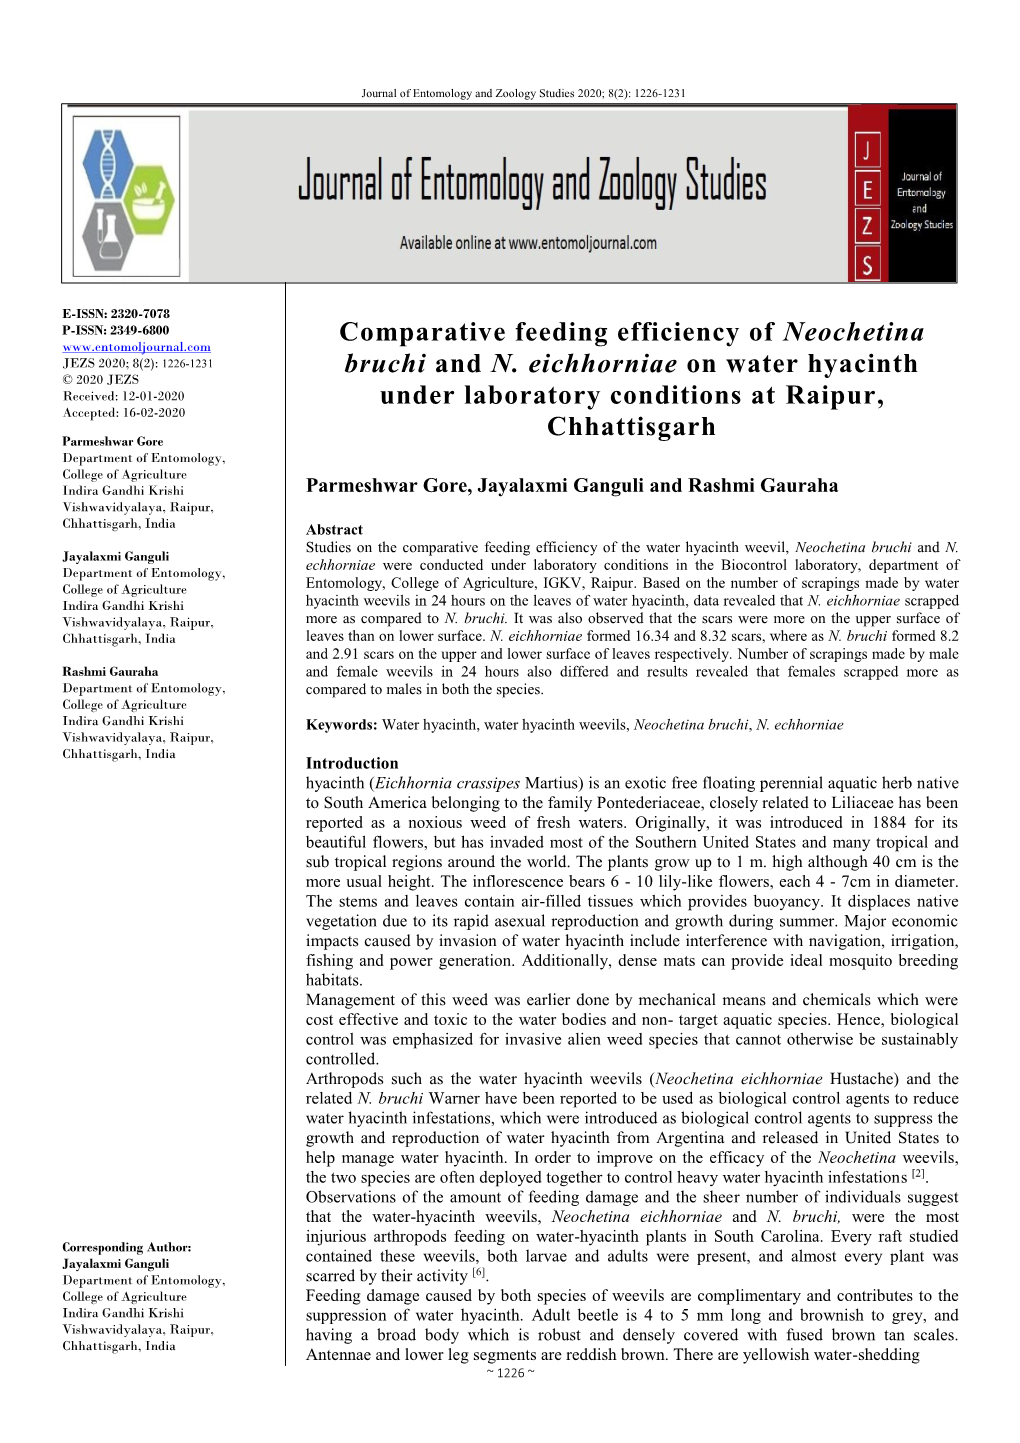 Comparative Feeding Efficiency of Neochetina Bruchi and N